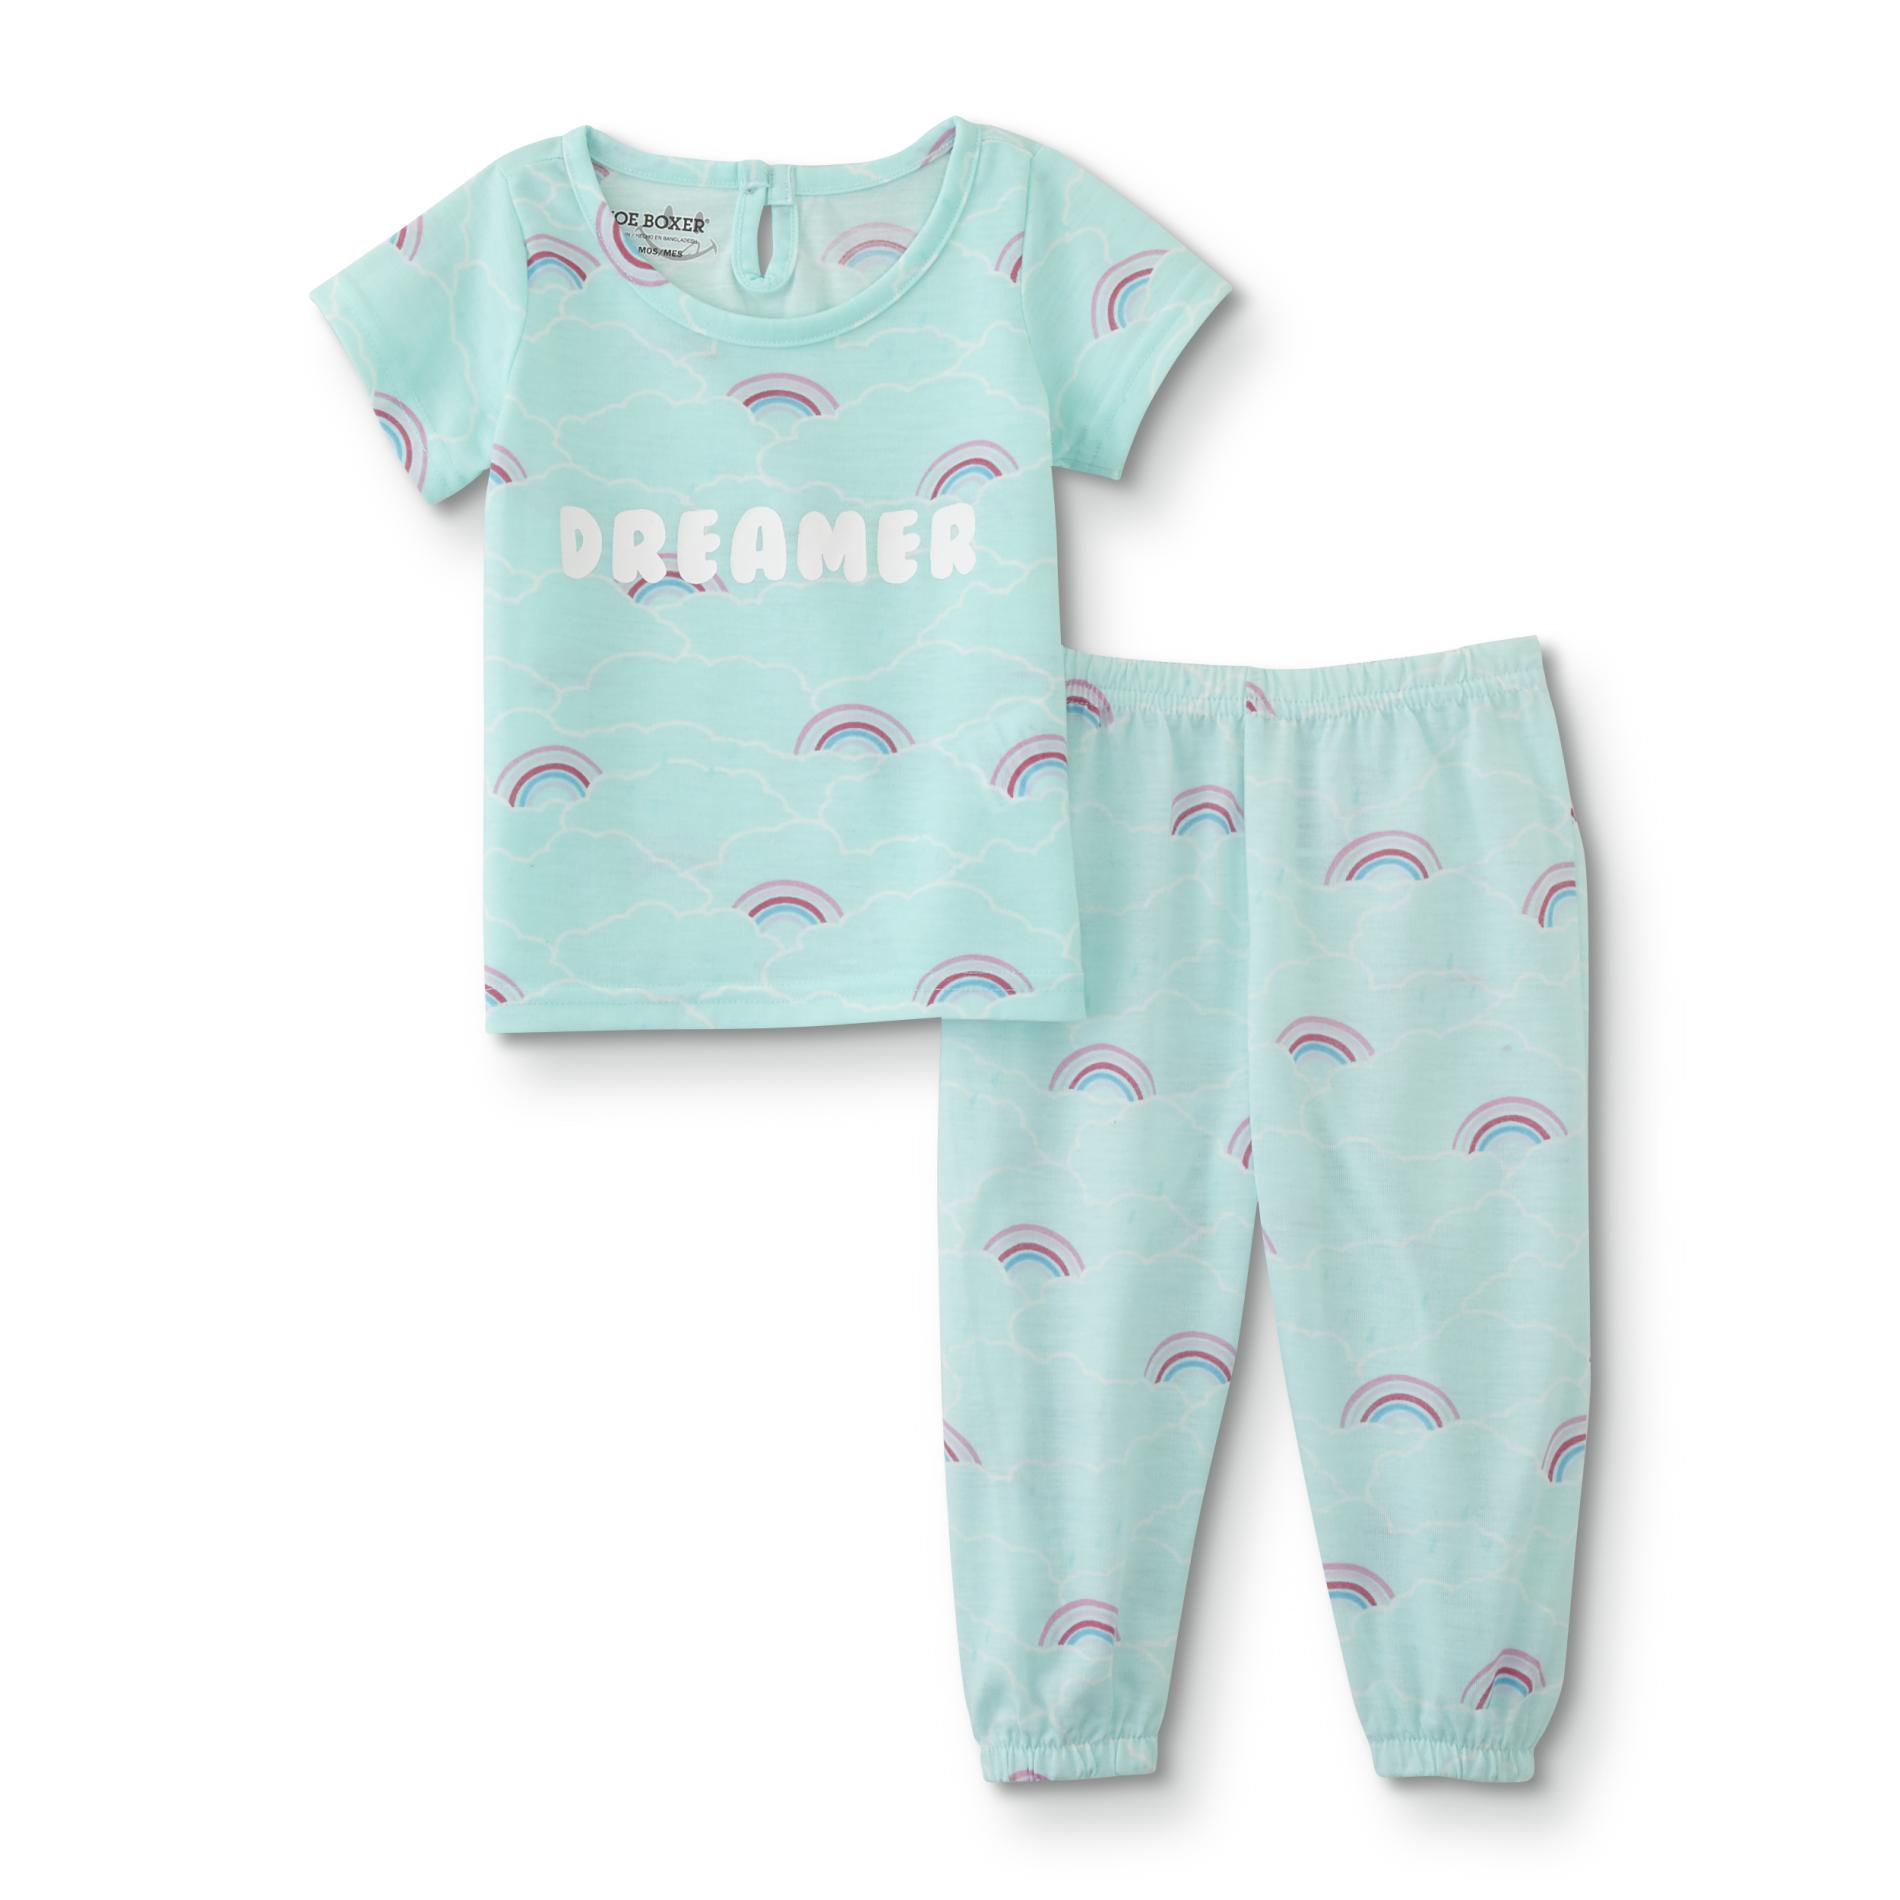 Joe Boxer Infant & Toddler Girls' Pajama Shirt & Pants - Rainbow